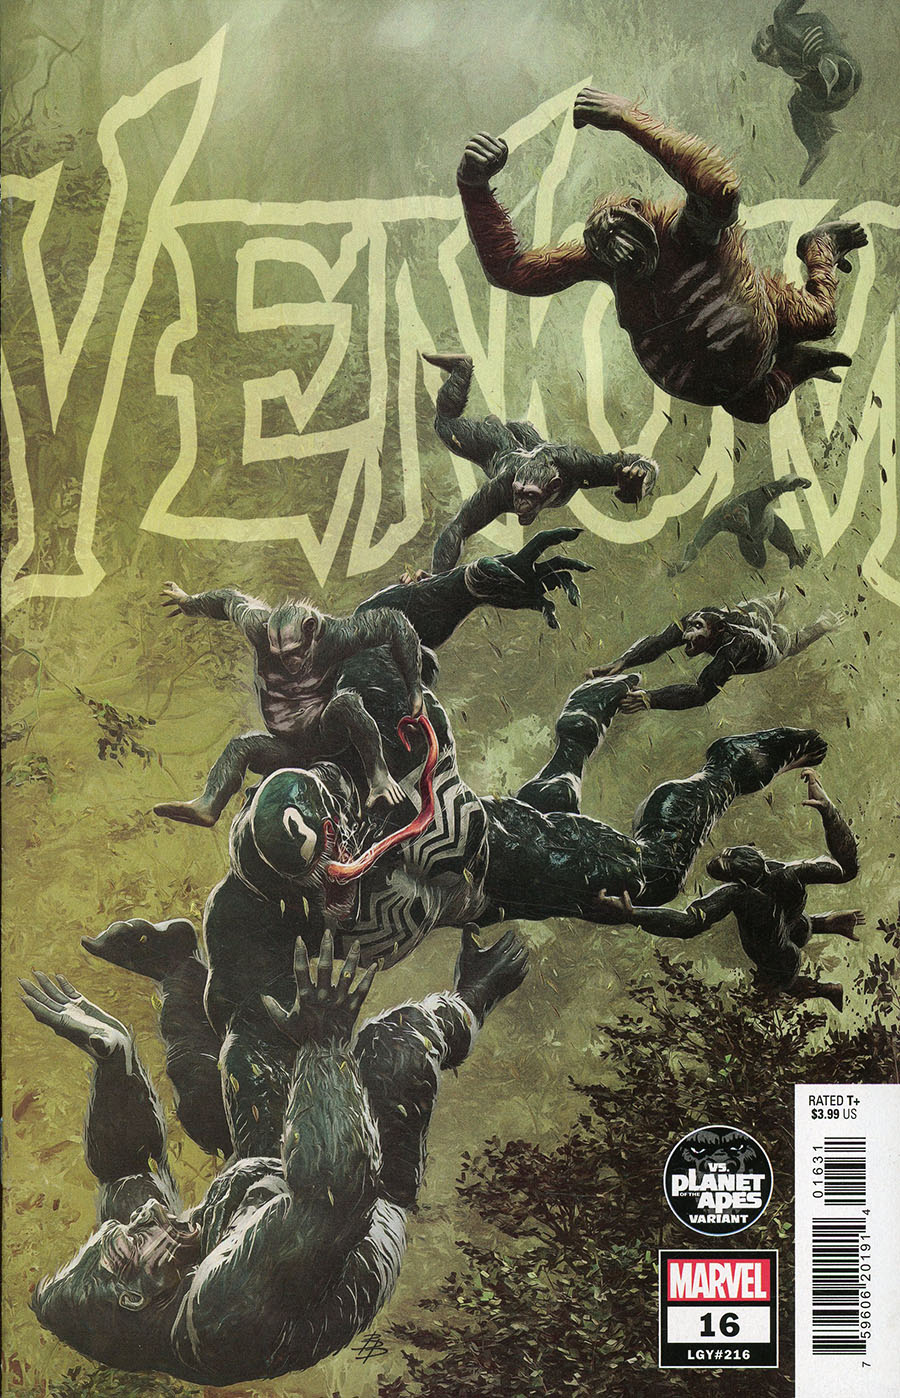 Venom Vol 5 #16 Cover B Variant Bjorn Barends Planet Of The Apes Cover (Dark Web Tie-In)